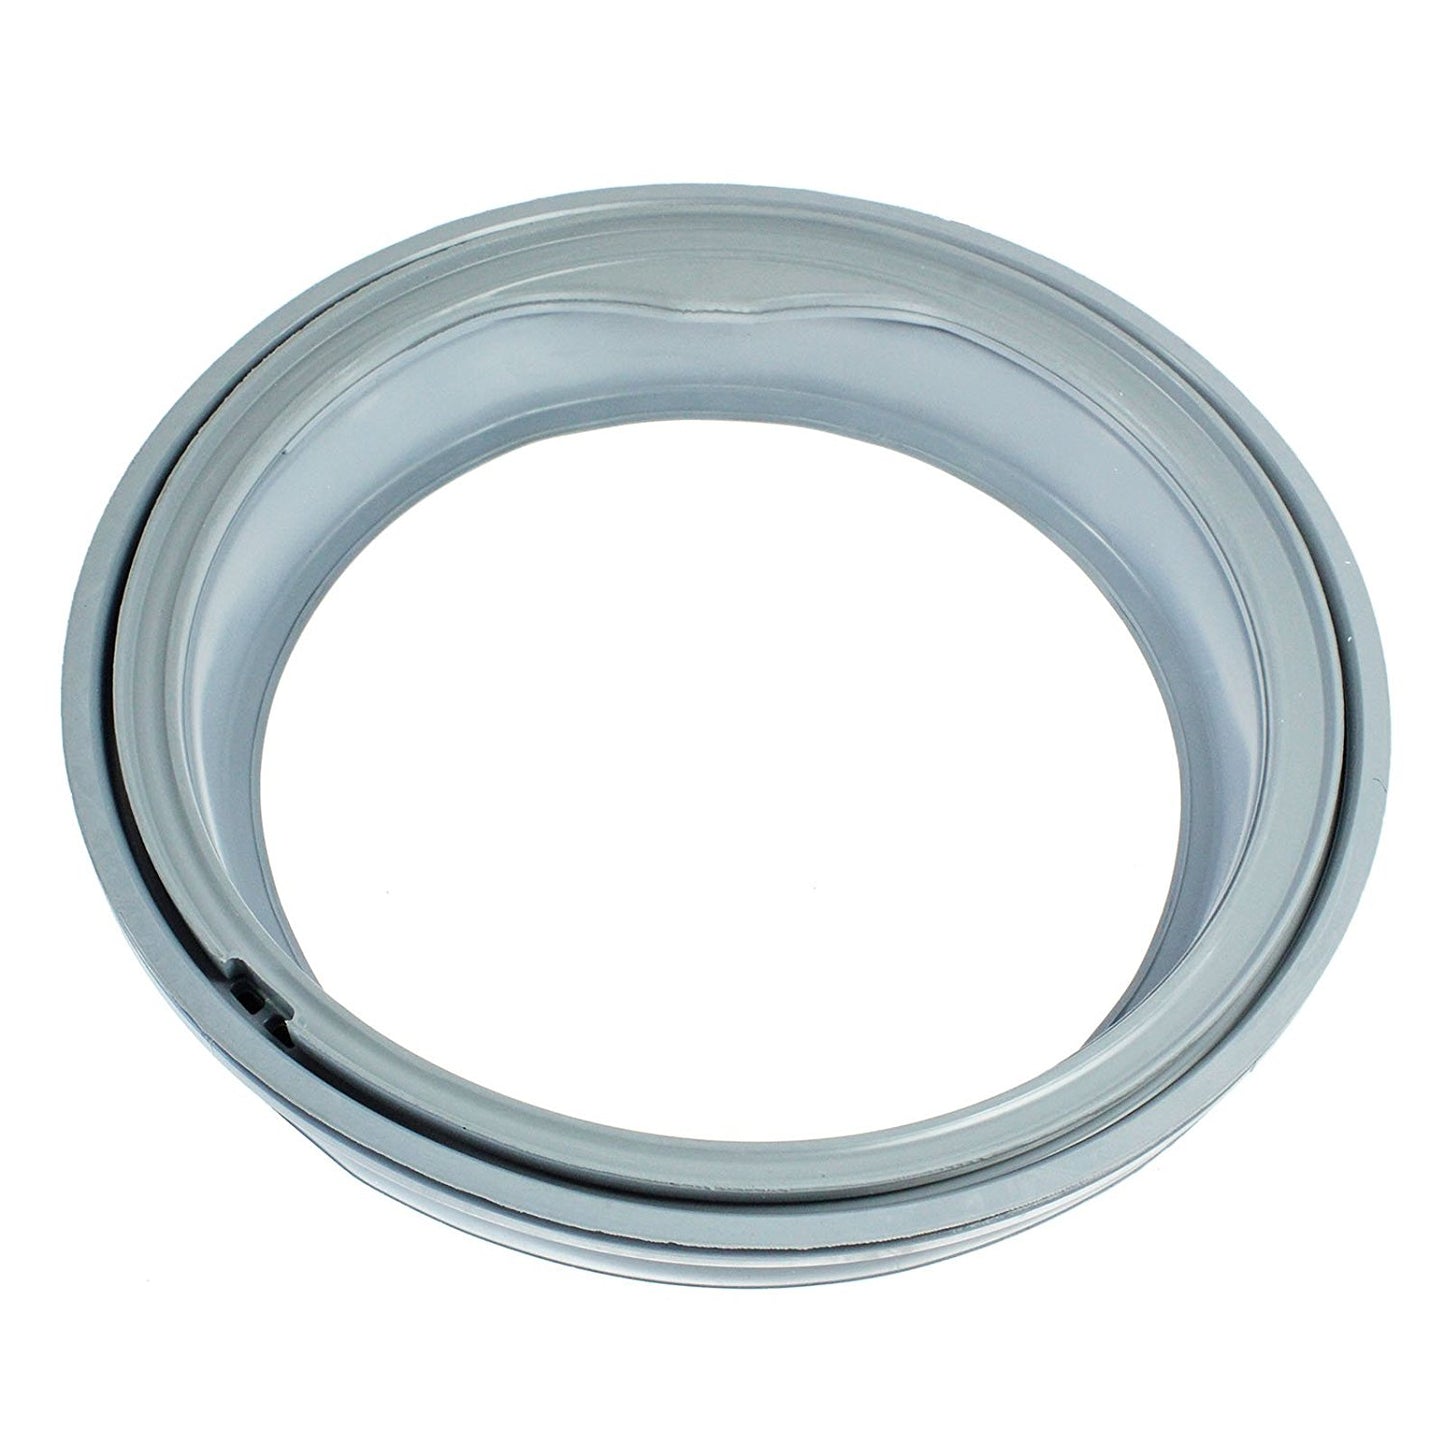 Rubber Window Door Seal Gasket Spare Part for Smeg Washing Machine - 754131546, 754132787, 757850017